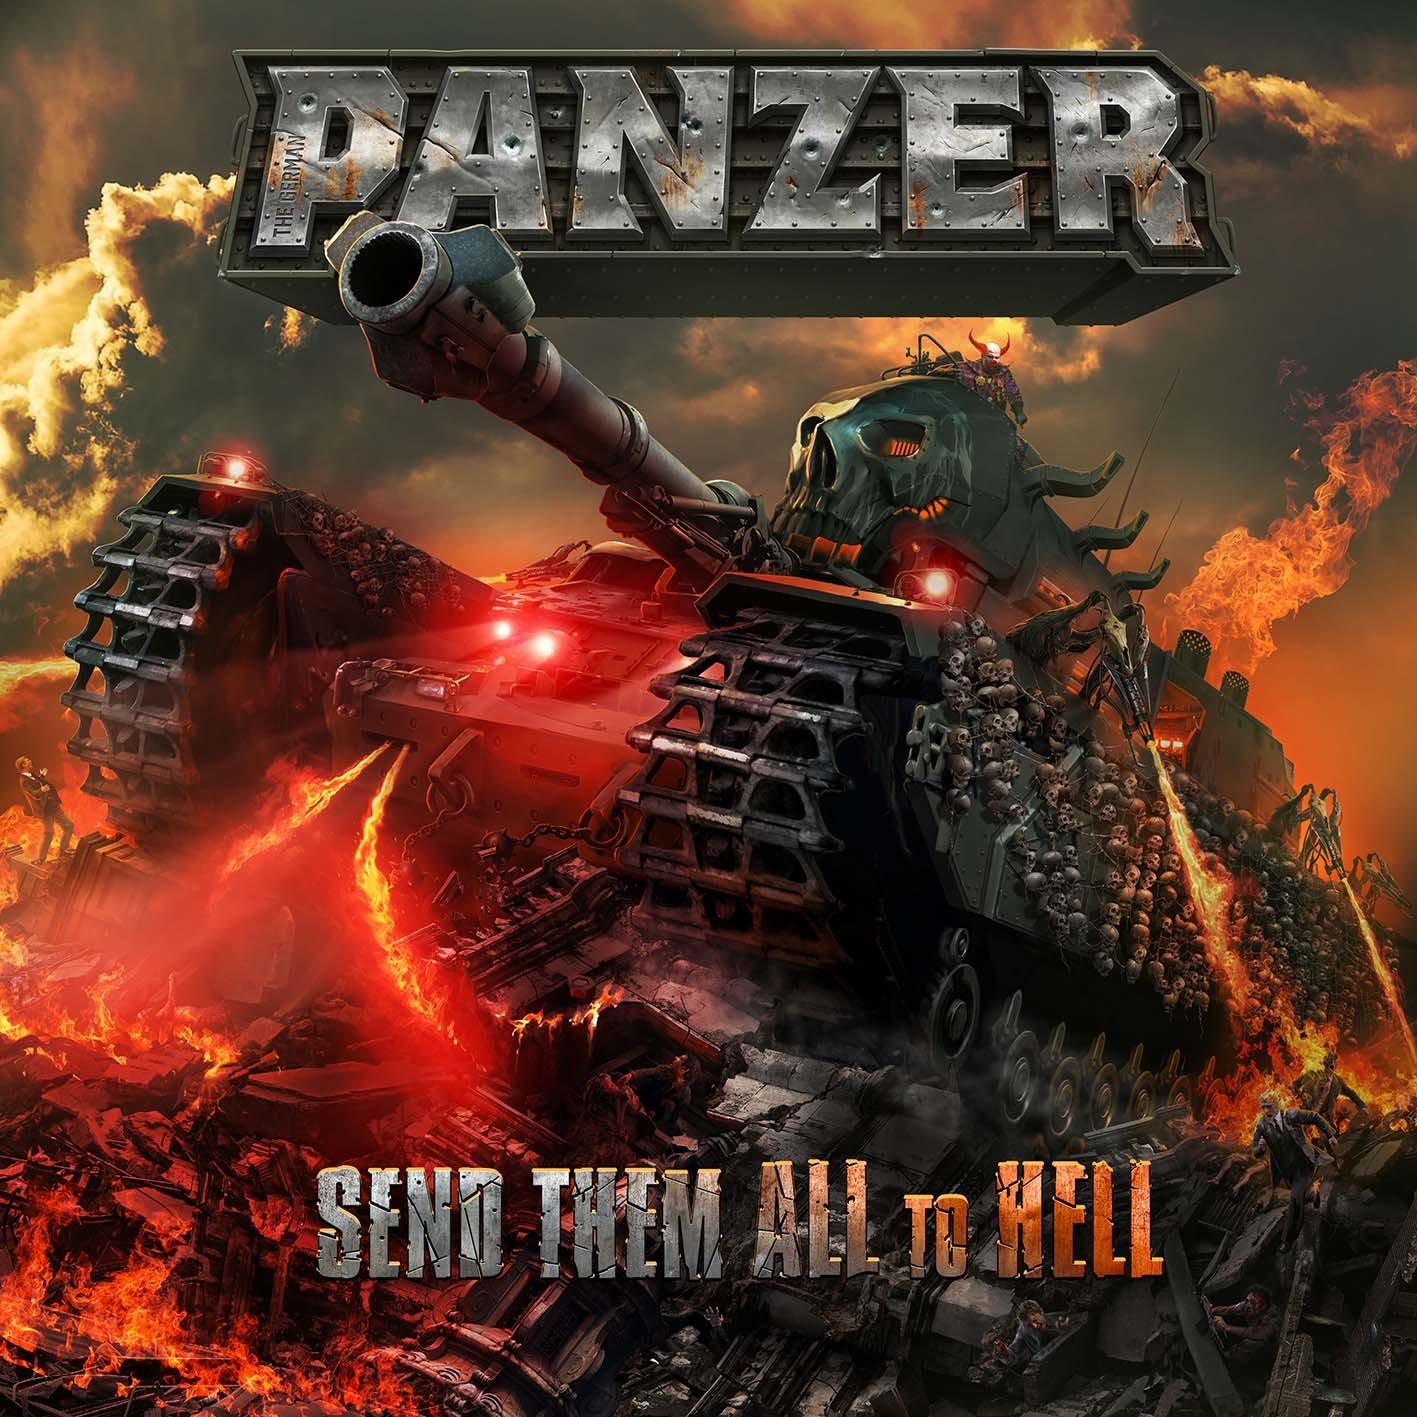 Pänzer - Send Them All To Hell (2014)